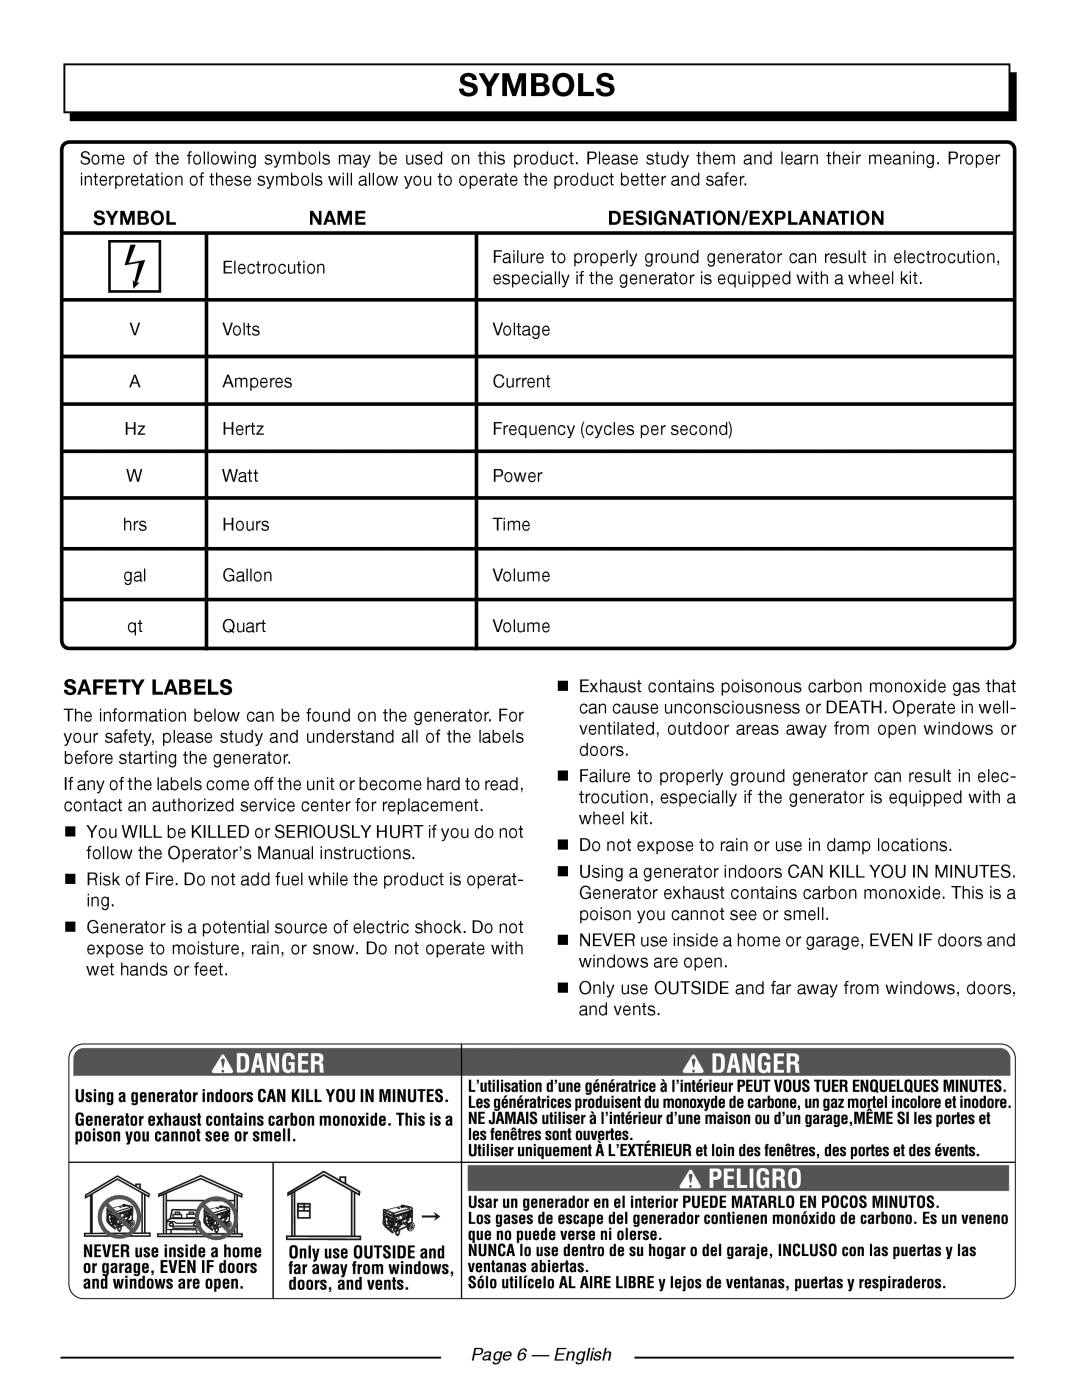 Homelite UT902250 manuel dutilisation Safety Labels, Page 6 — English, Symbols, Name, Designation/Explanation 